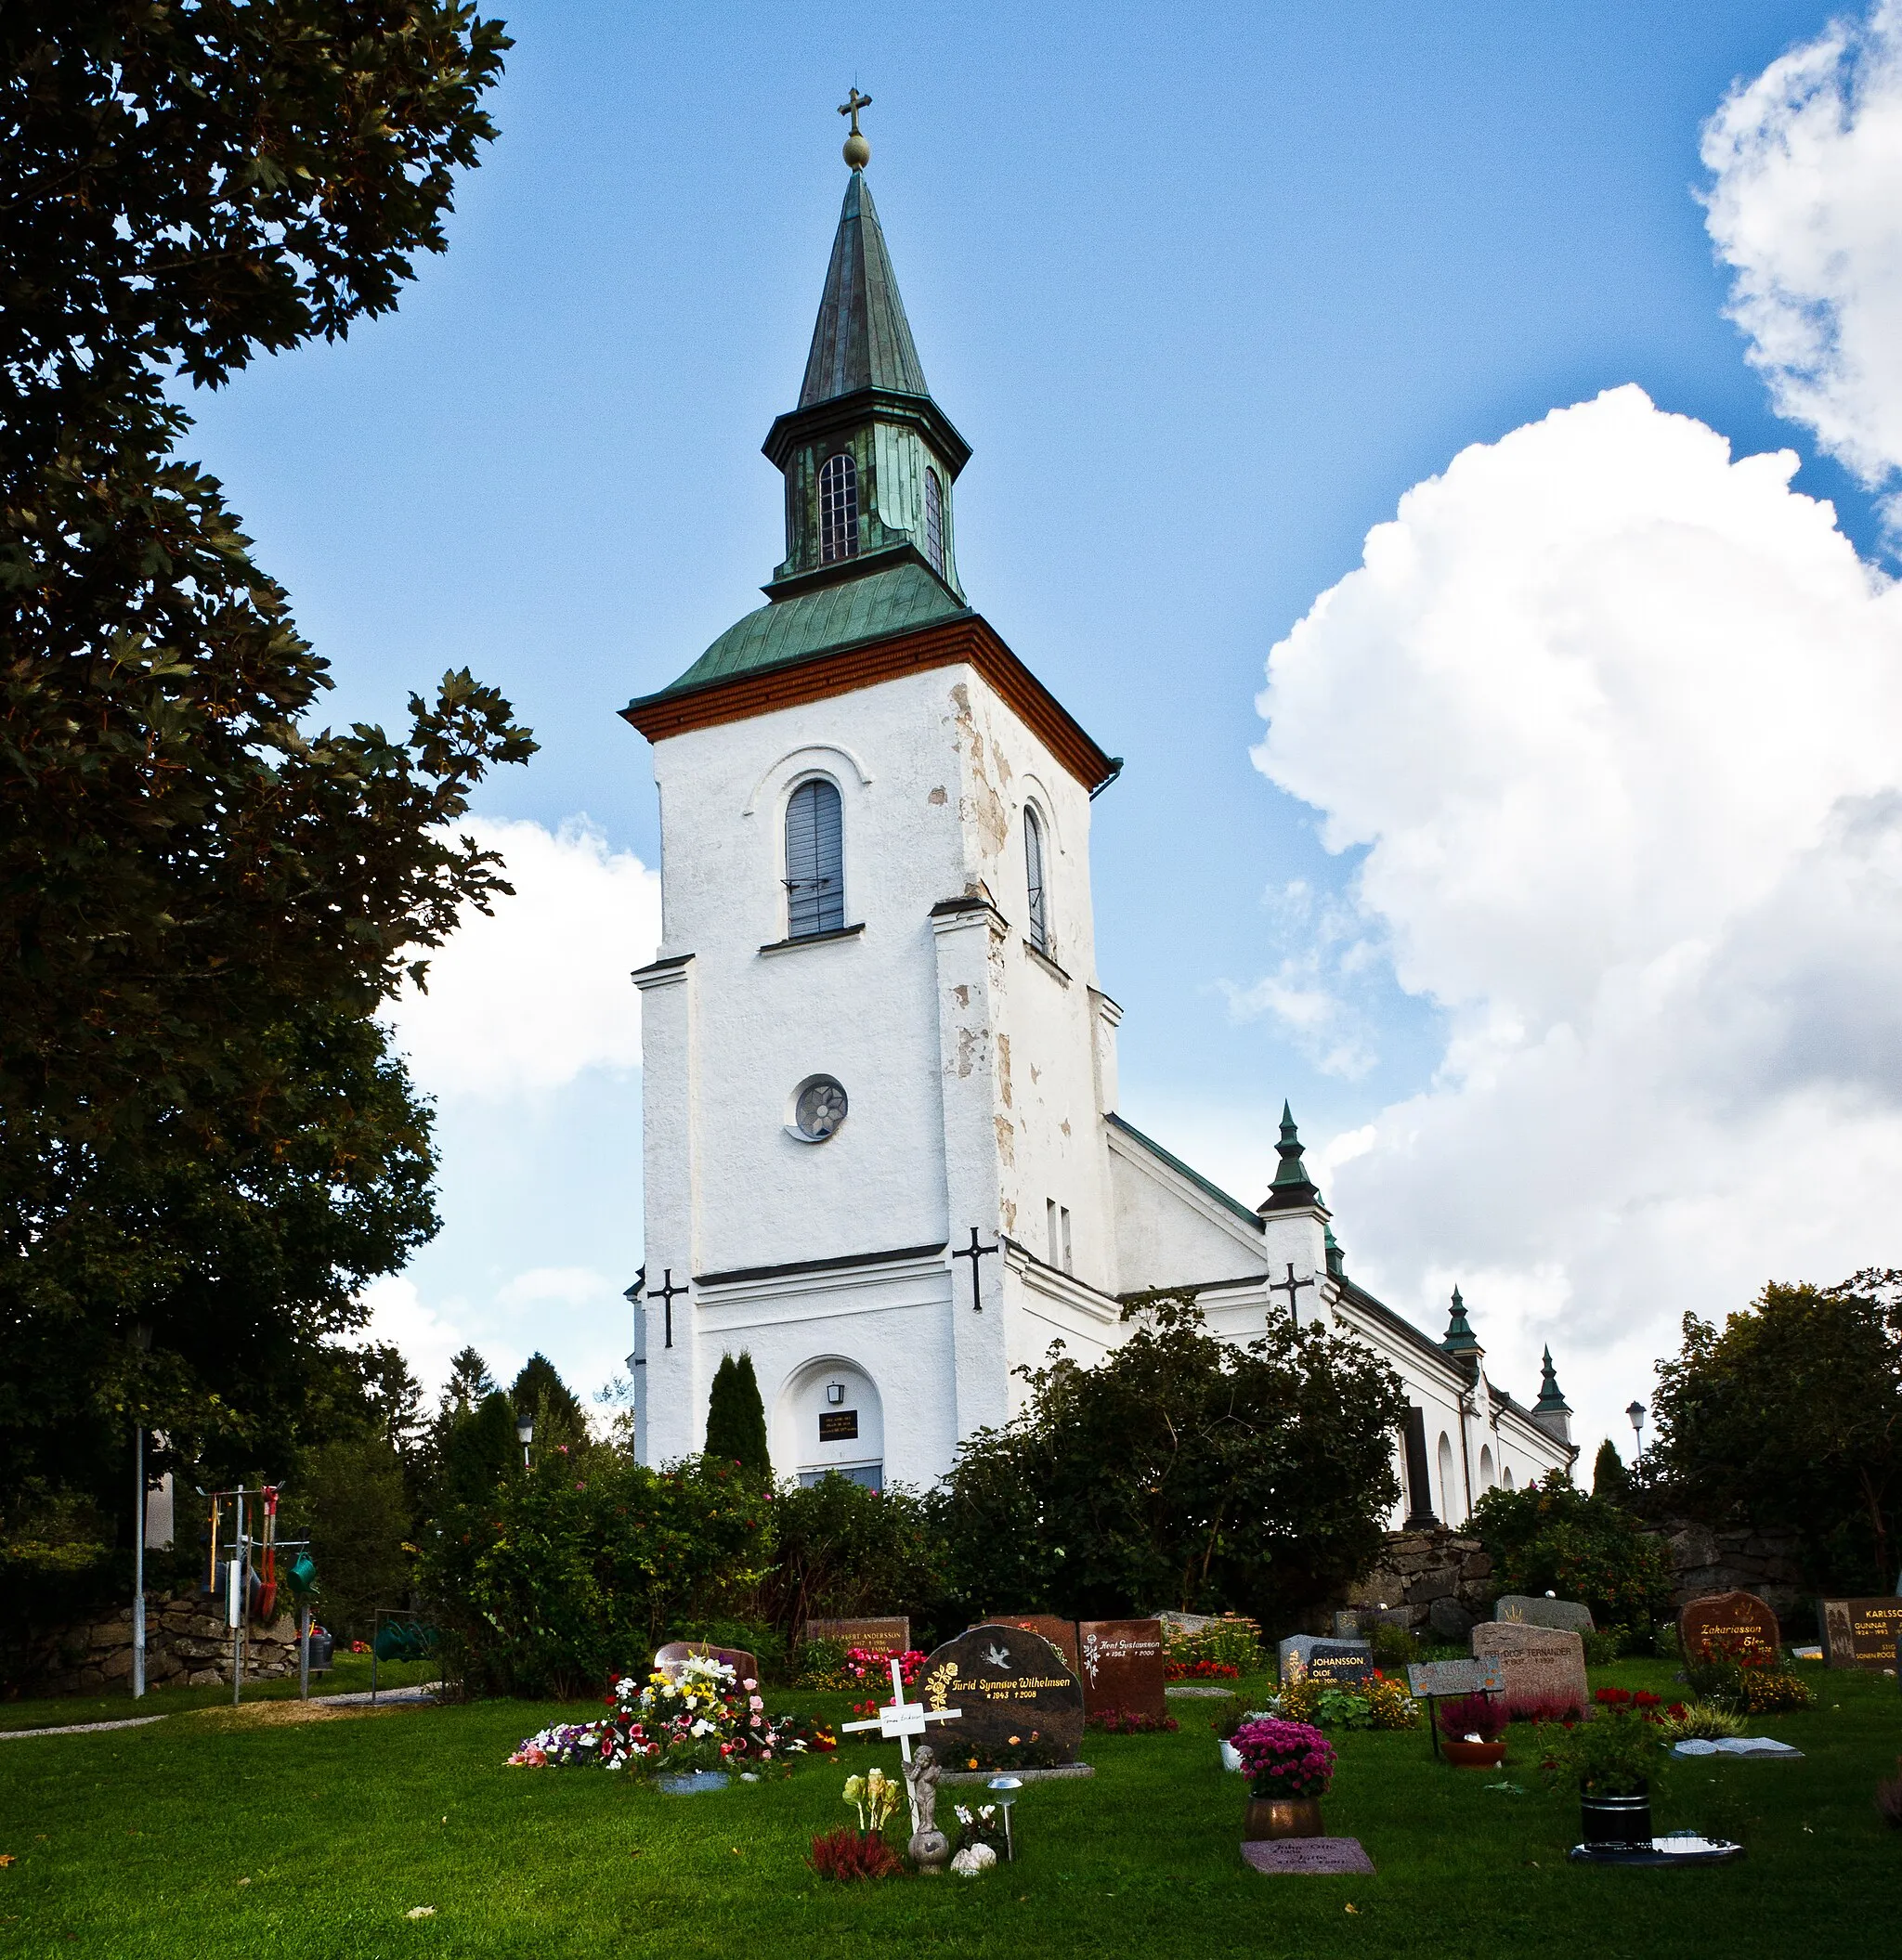 Image of Färgelanda